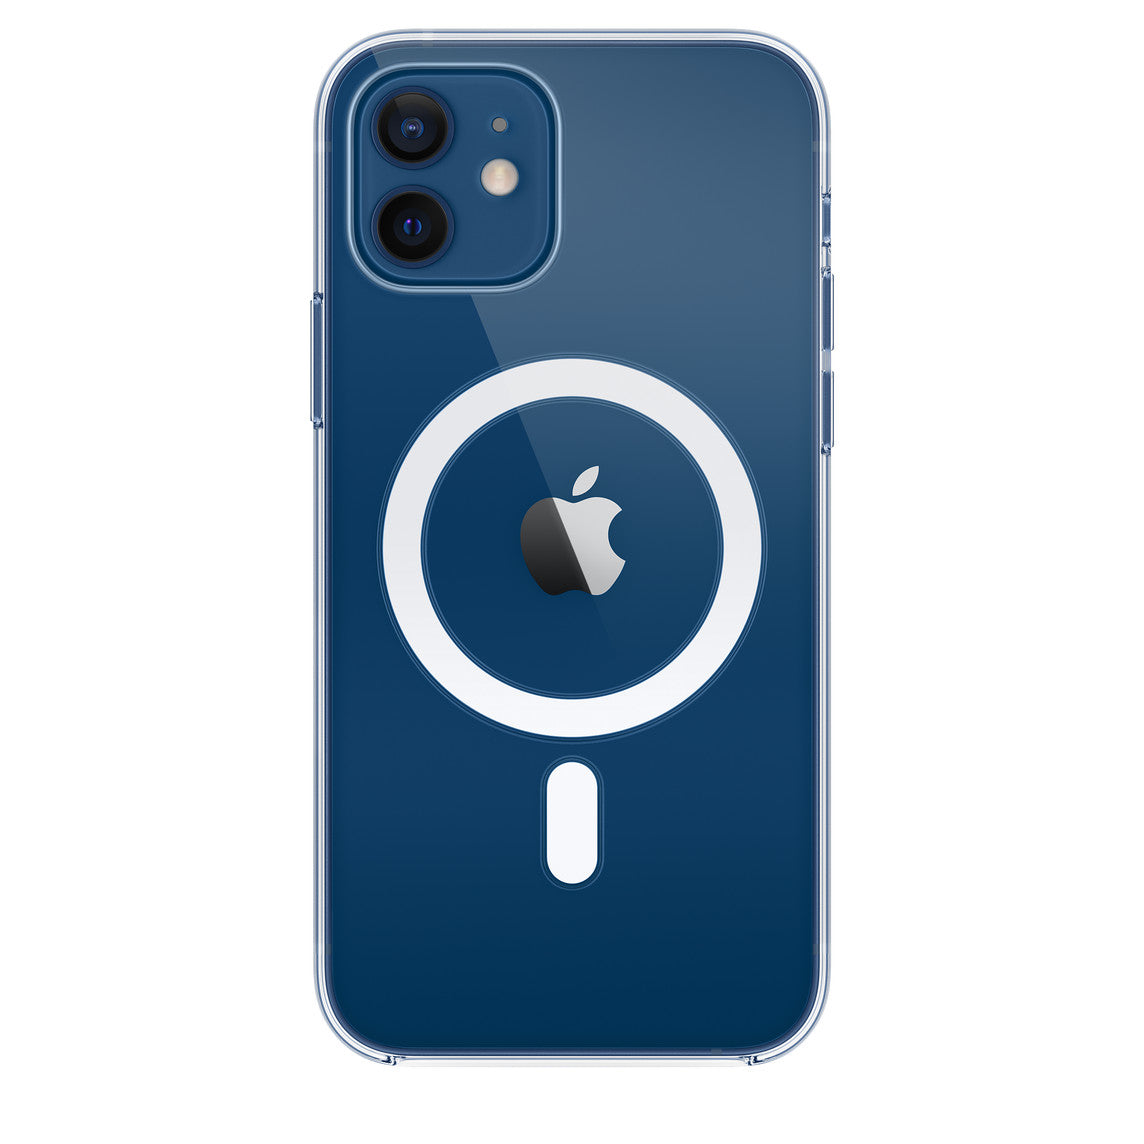 Apple غطاء حماية شفاف لهاتف iPhone 12 وiPhone 12 Pro بتقنية MagSafe